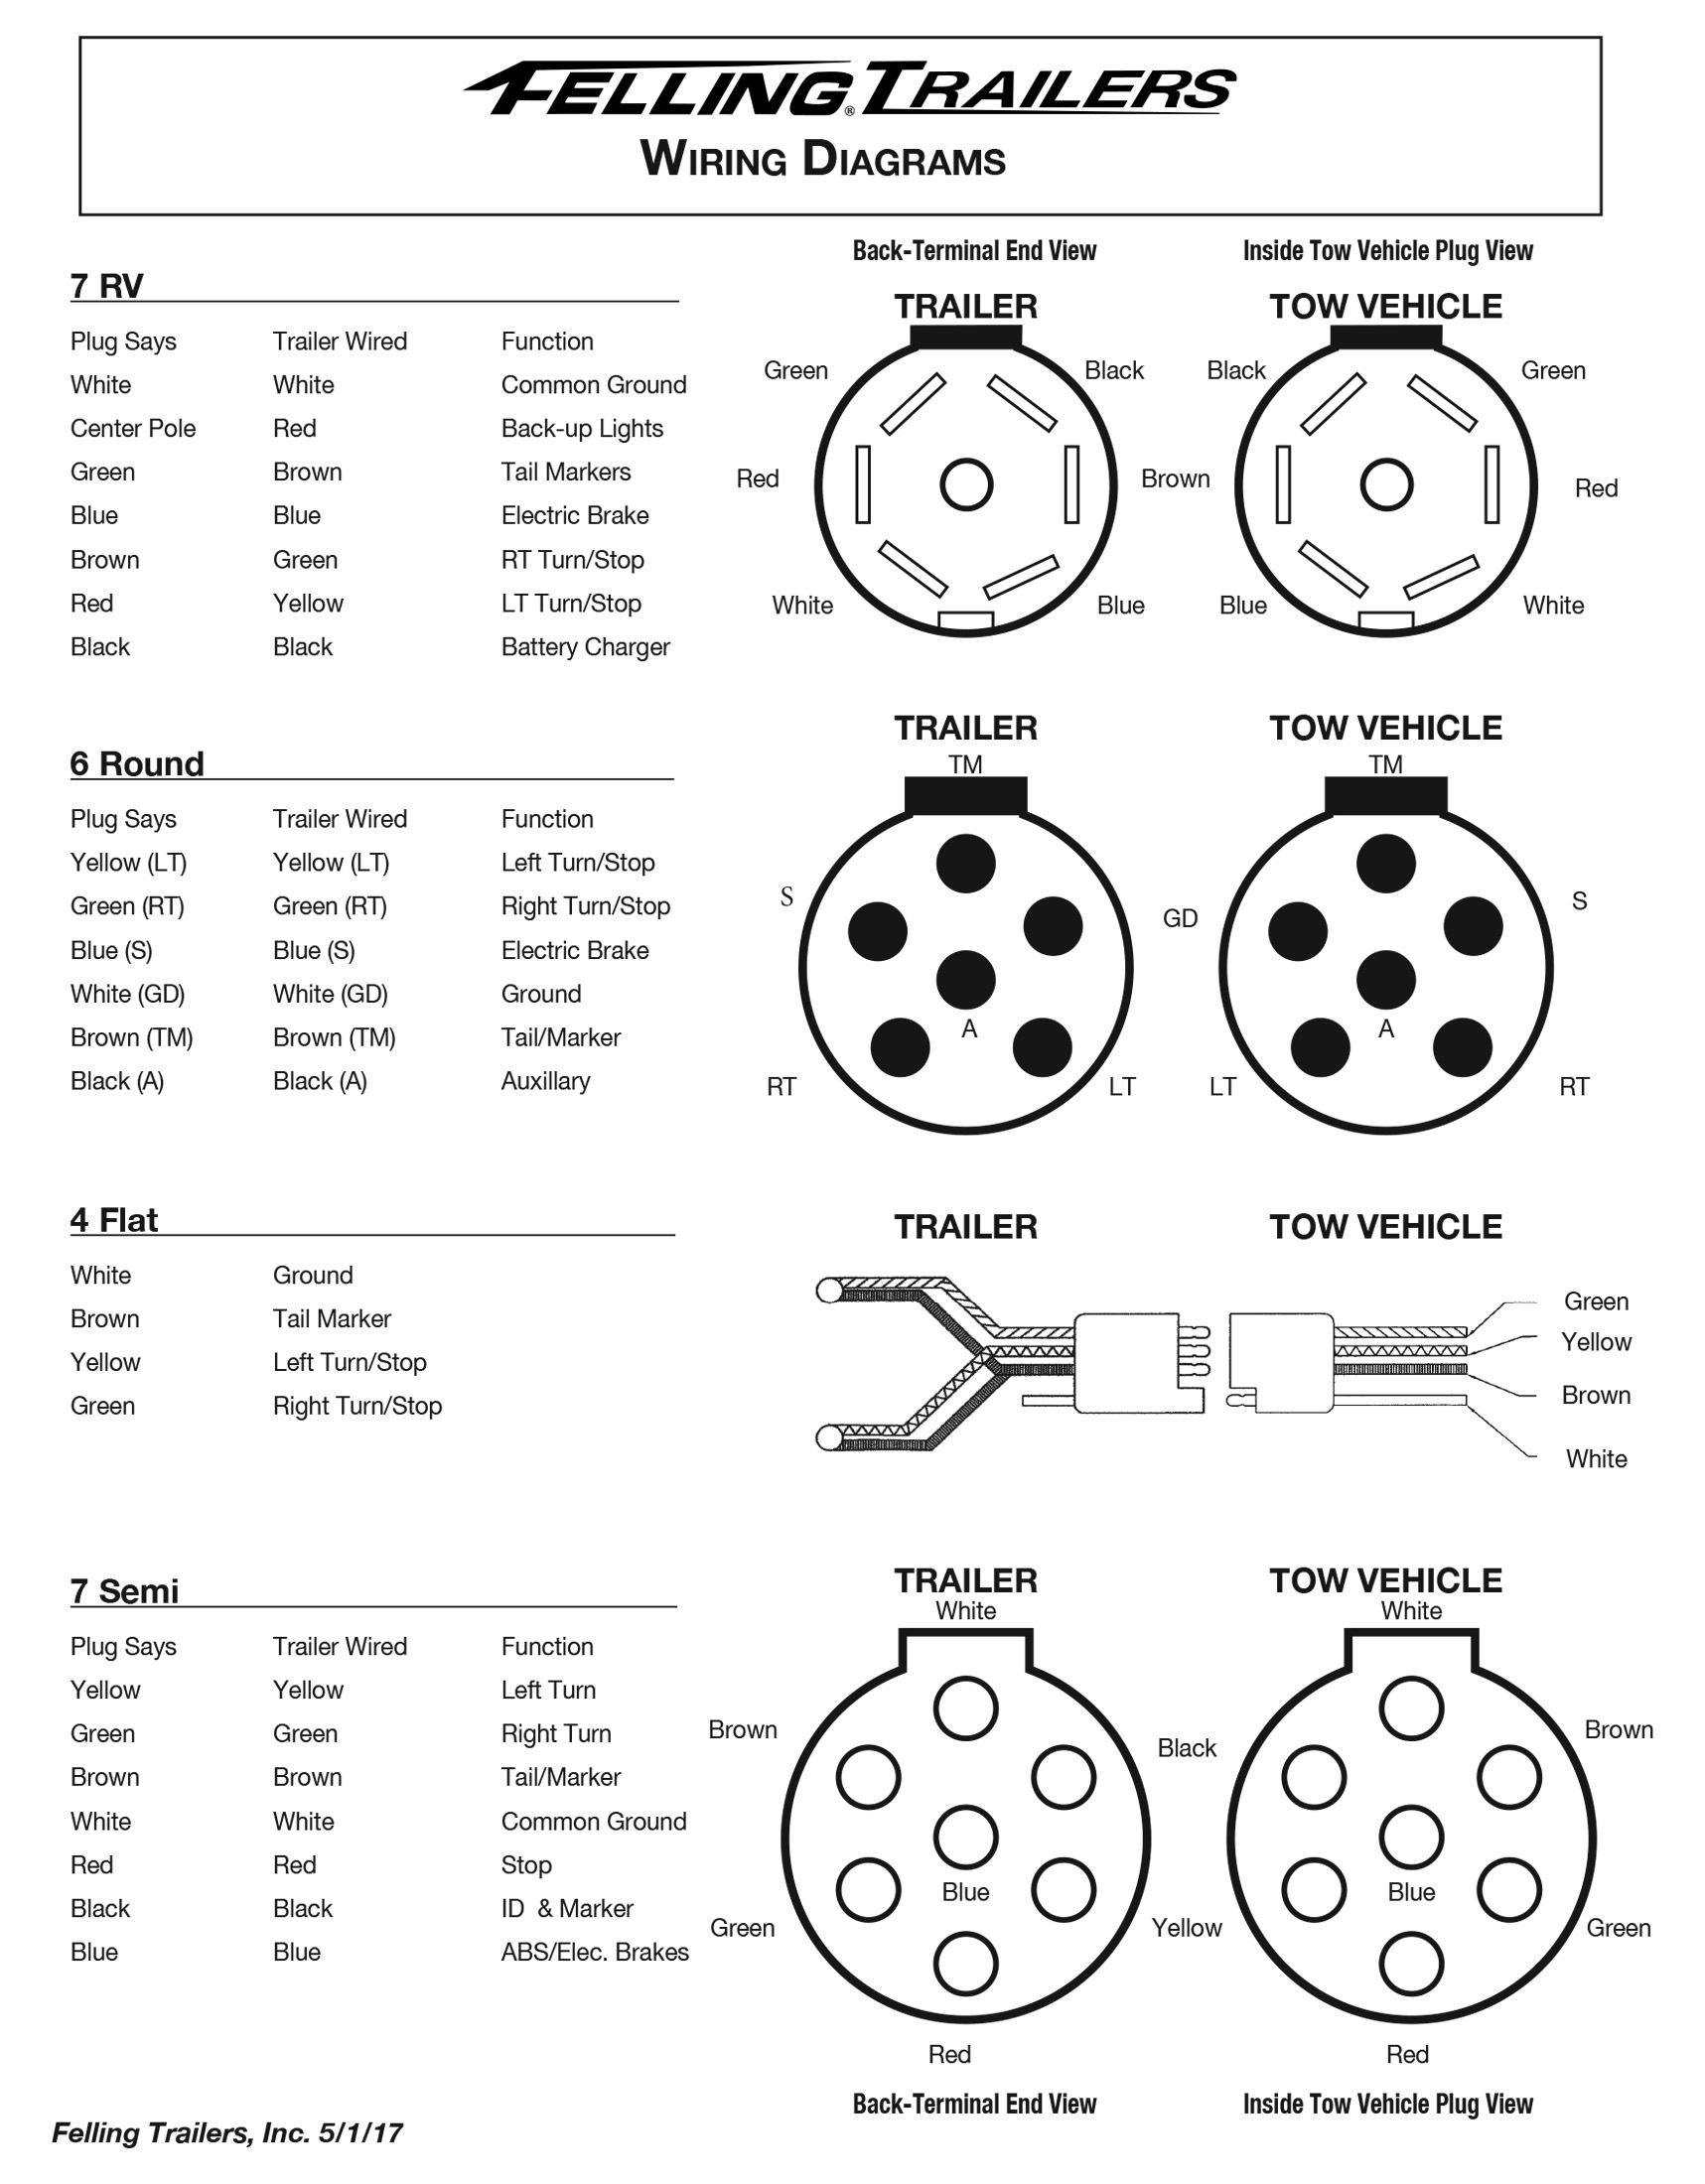 Service- Felling Trailers Wiring Diagrams, Wheel Toque - 4 Flat Wiring Diagram